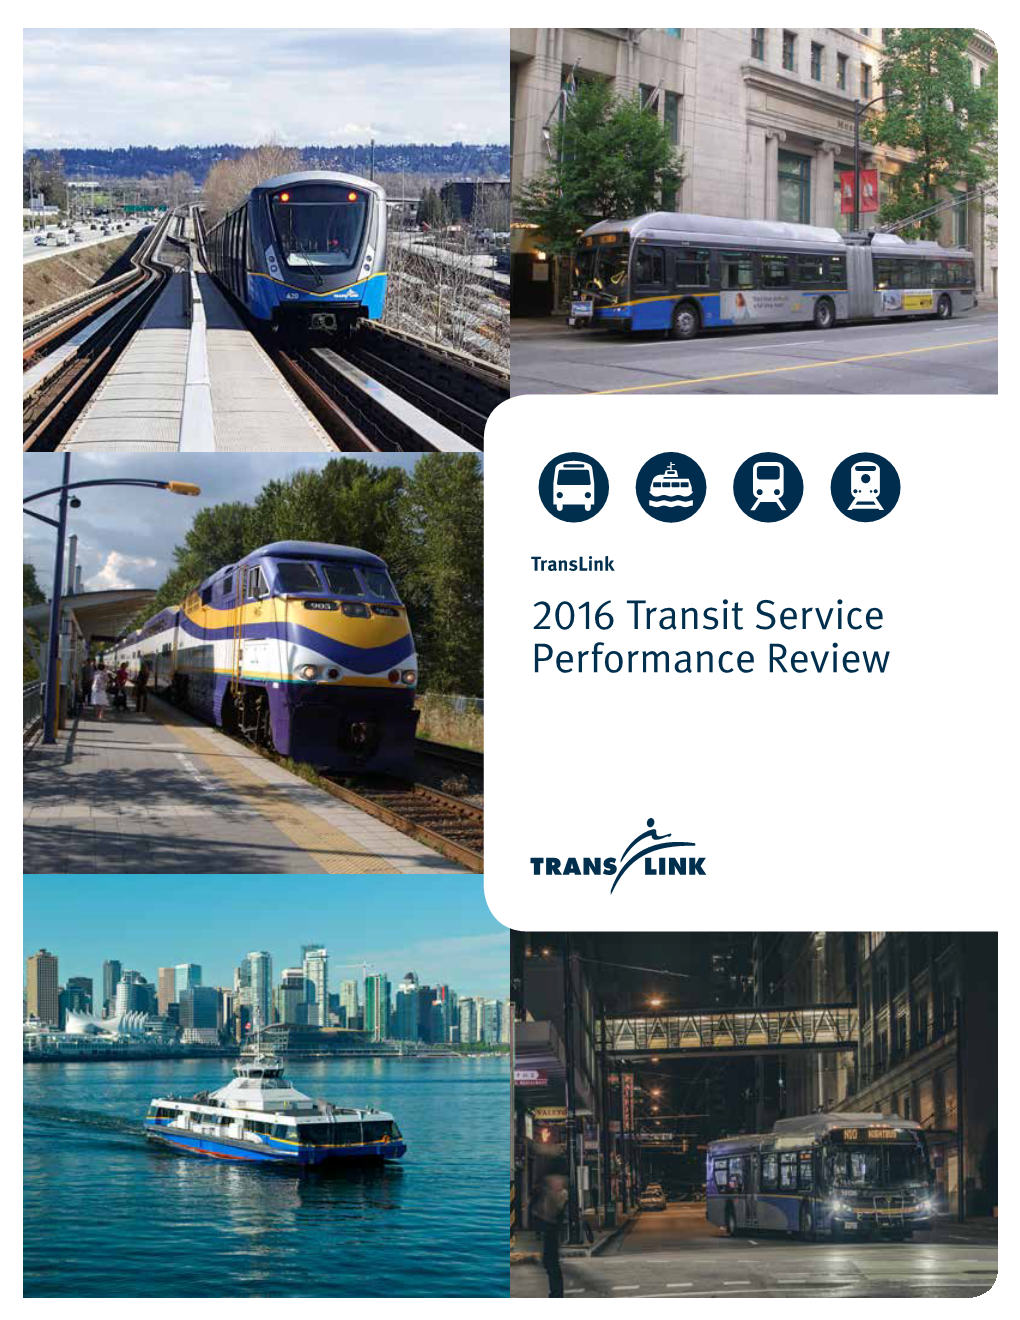 2016 Transit Service Performance Review 2 2016 TRANSIT SERVICE PERFORMANCE REVIEW